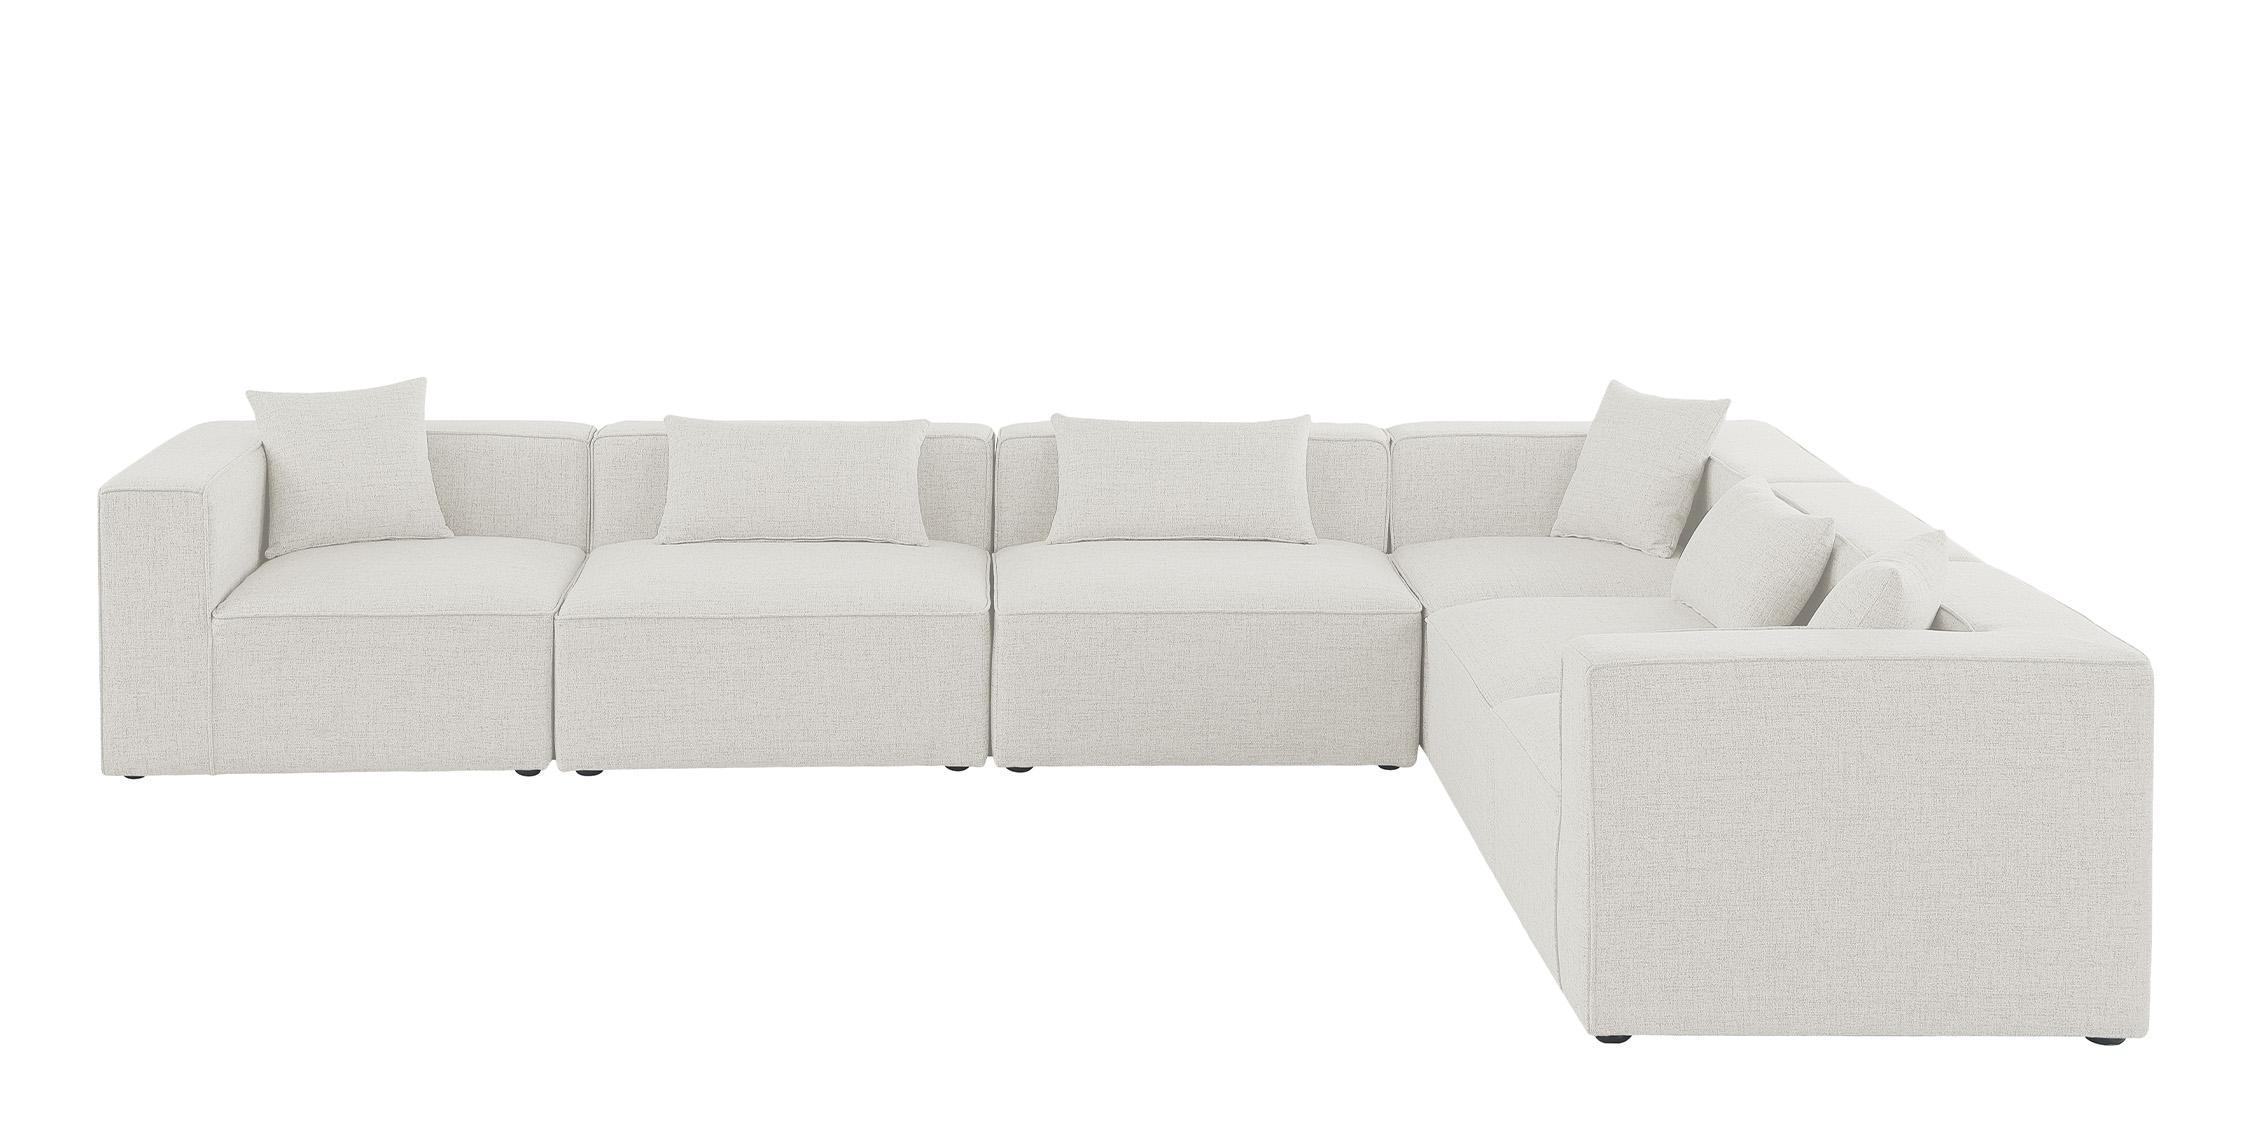 

    
Meridian Furniture CUBE 630Cream-Sec6A Modular Sectional Sofa Cream 630Cream-Sec6A
